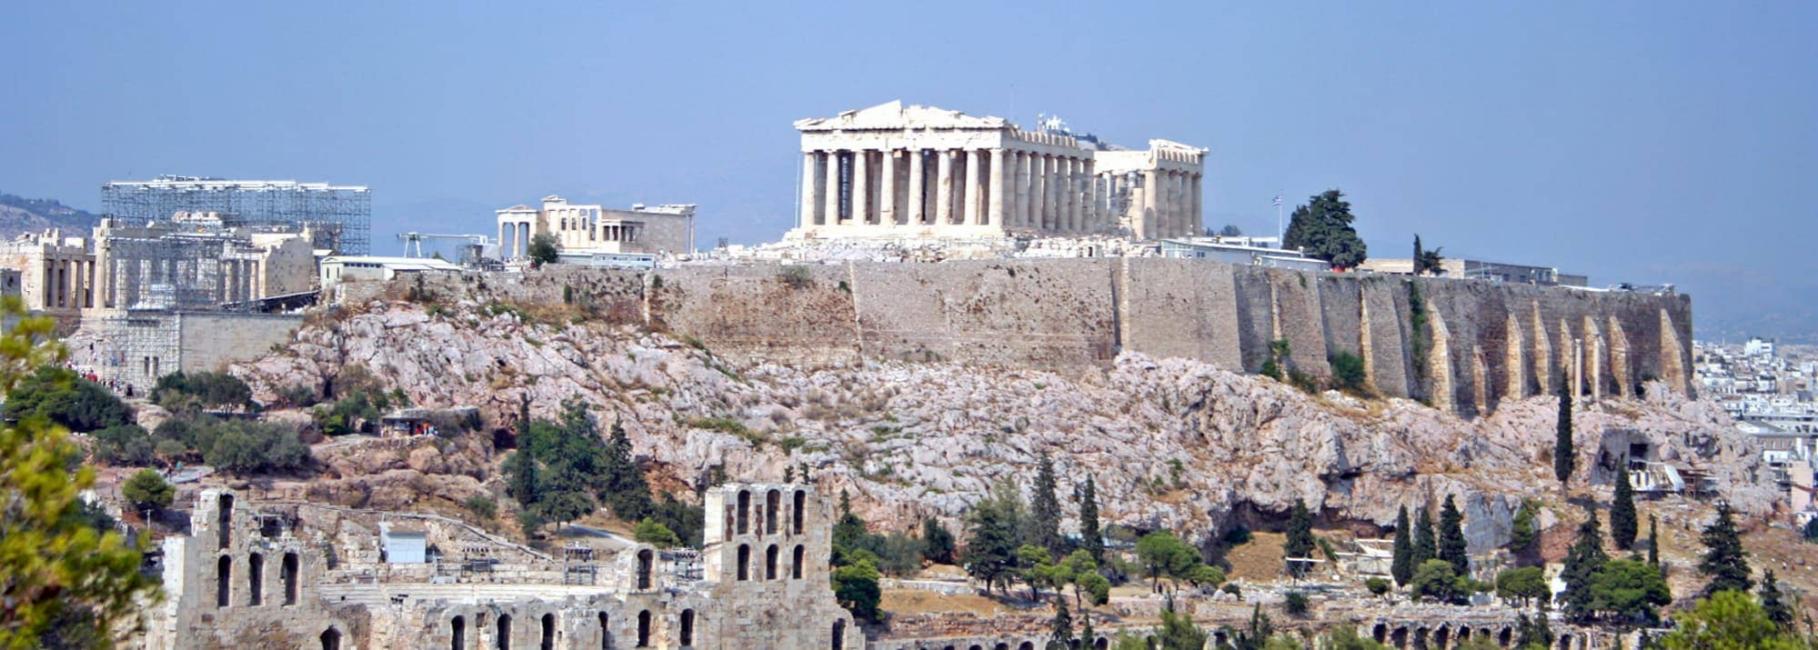 greece cultural trip header nst